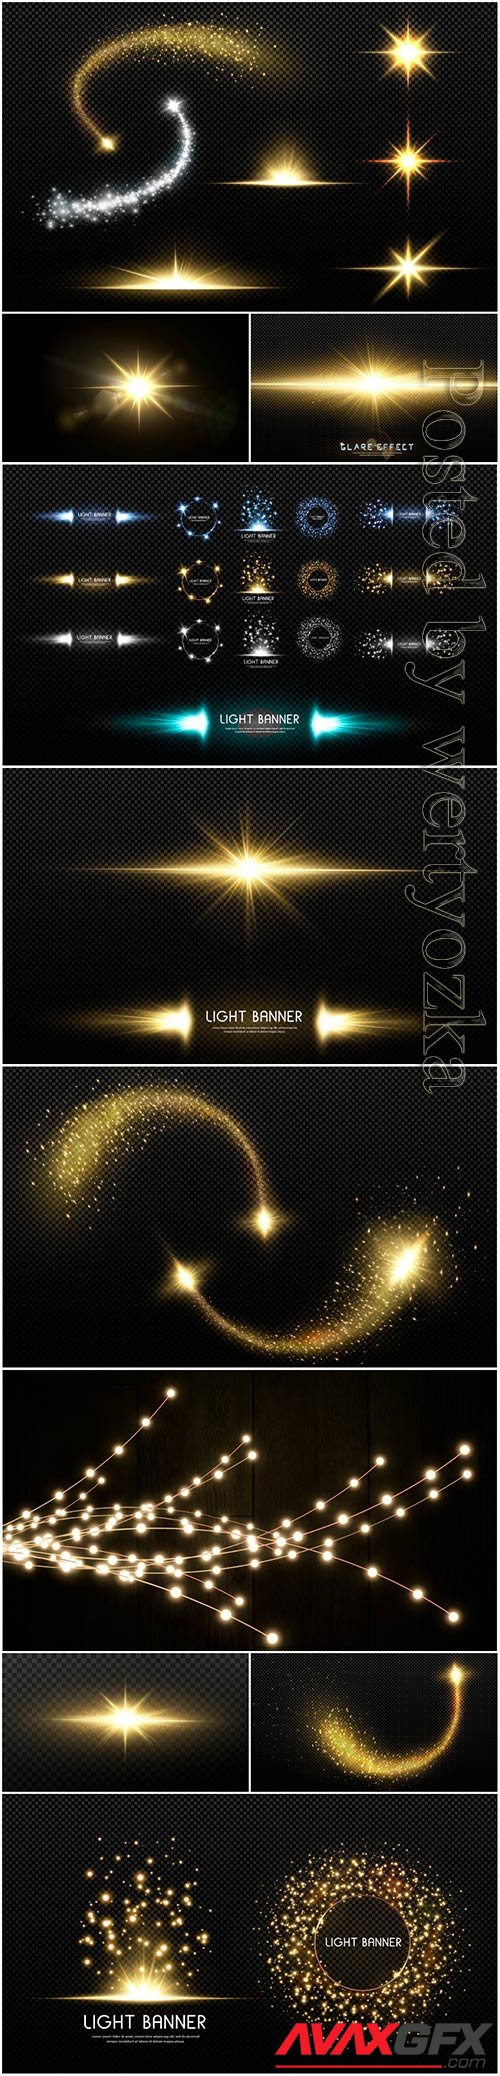 Golden light comet, magic light line, gold star vector element